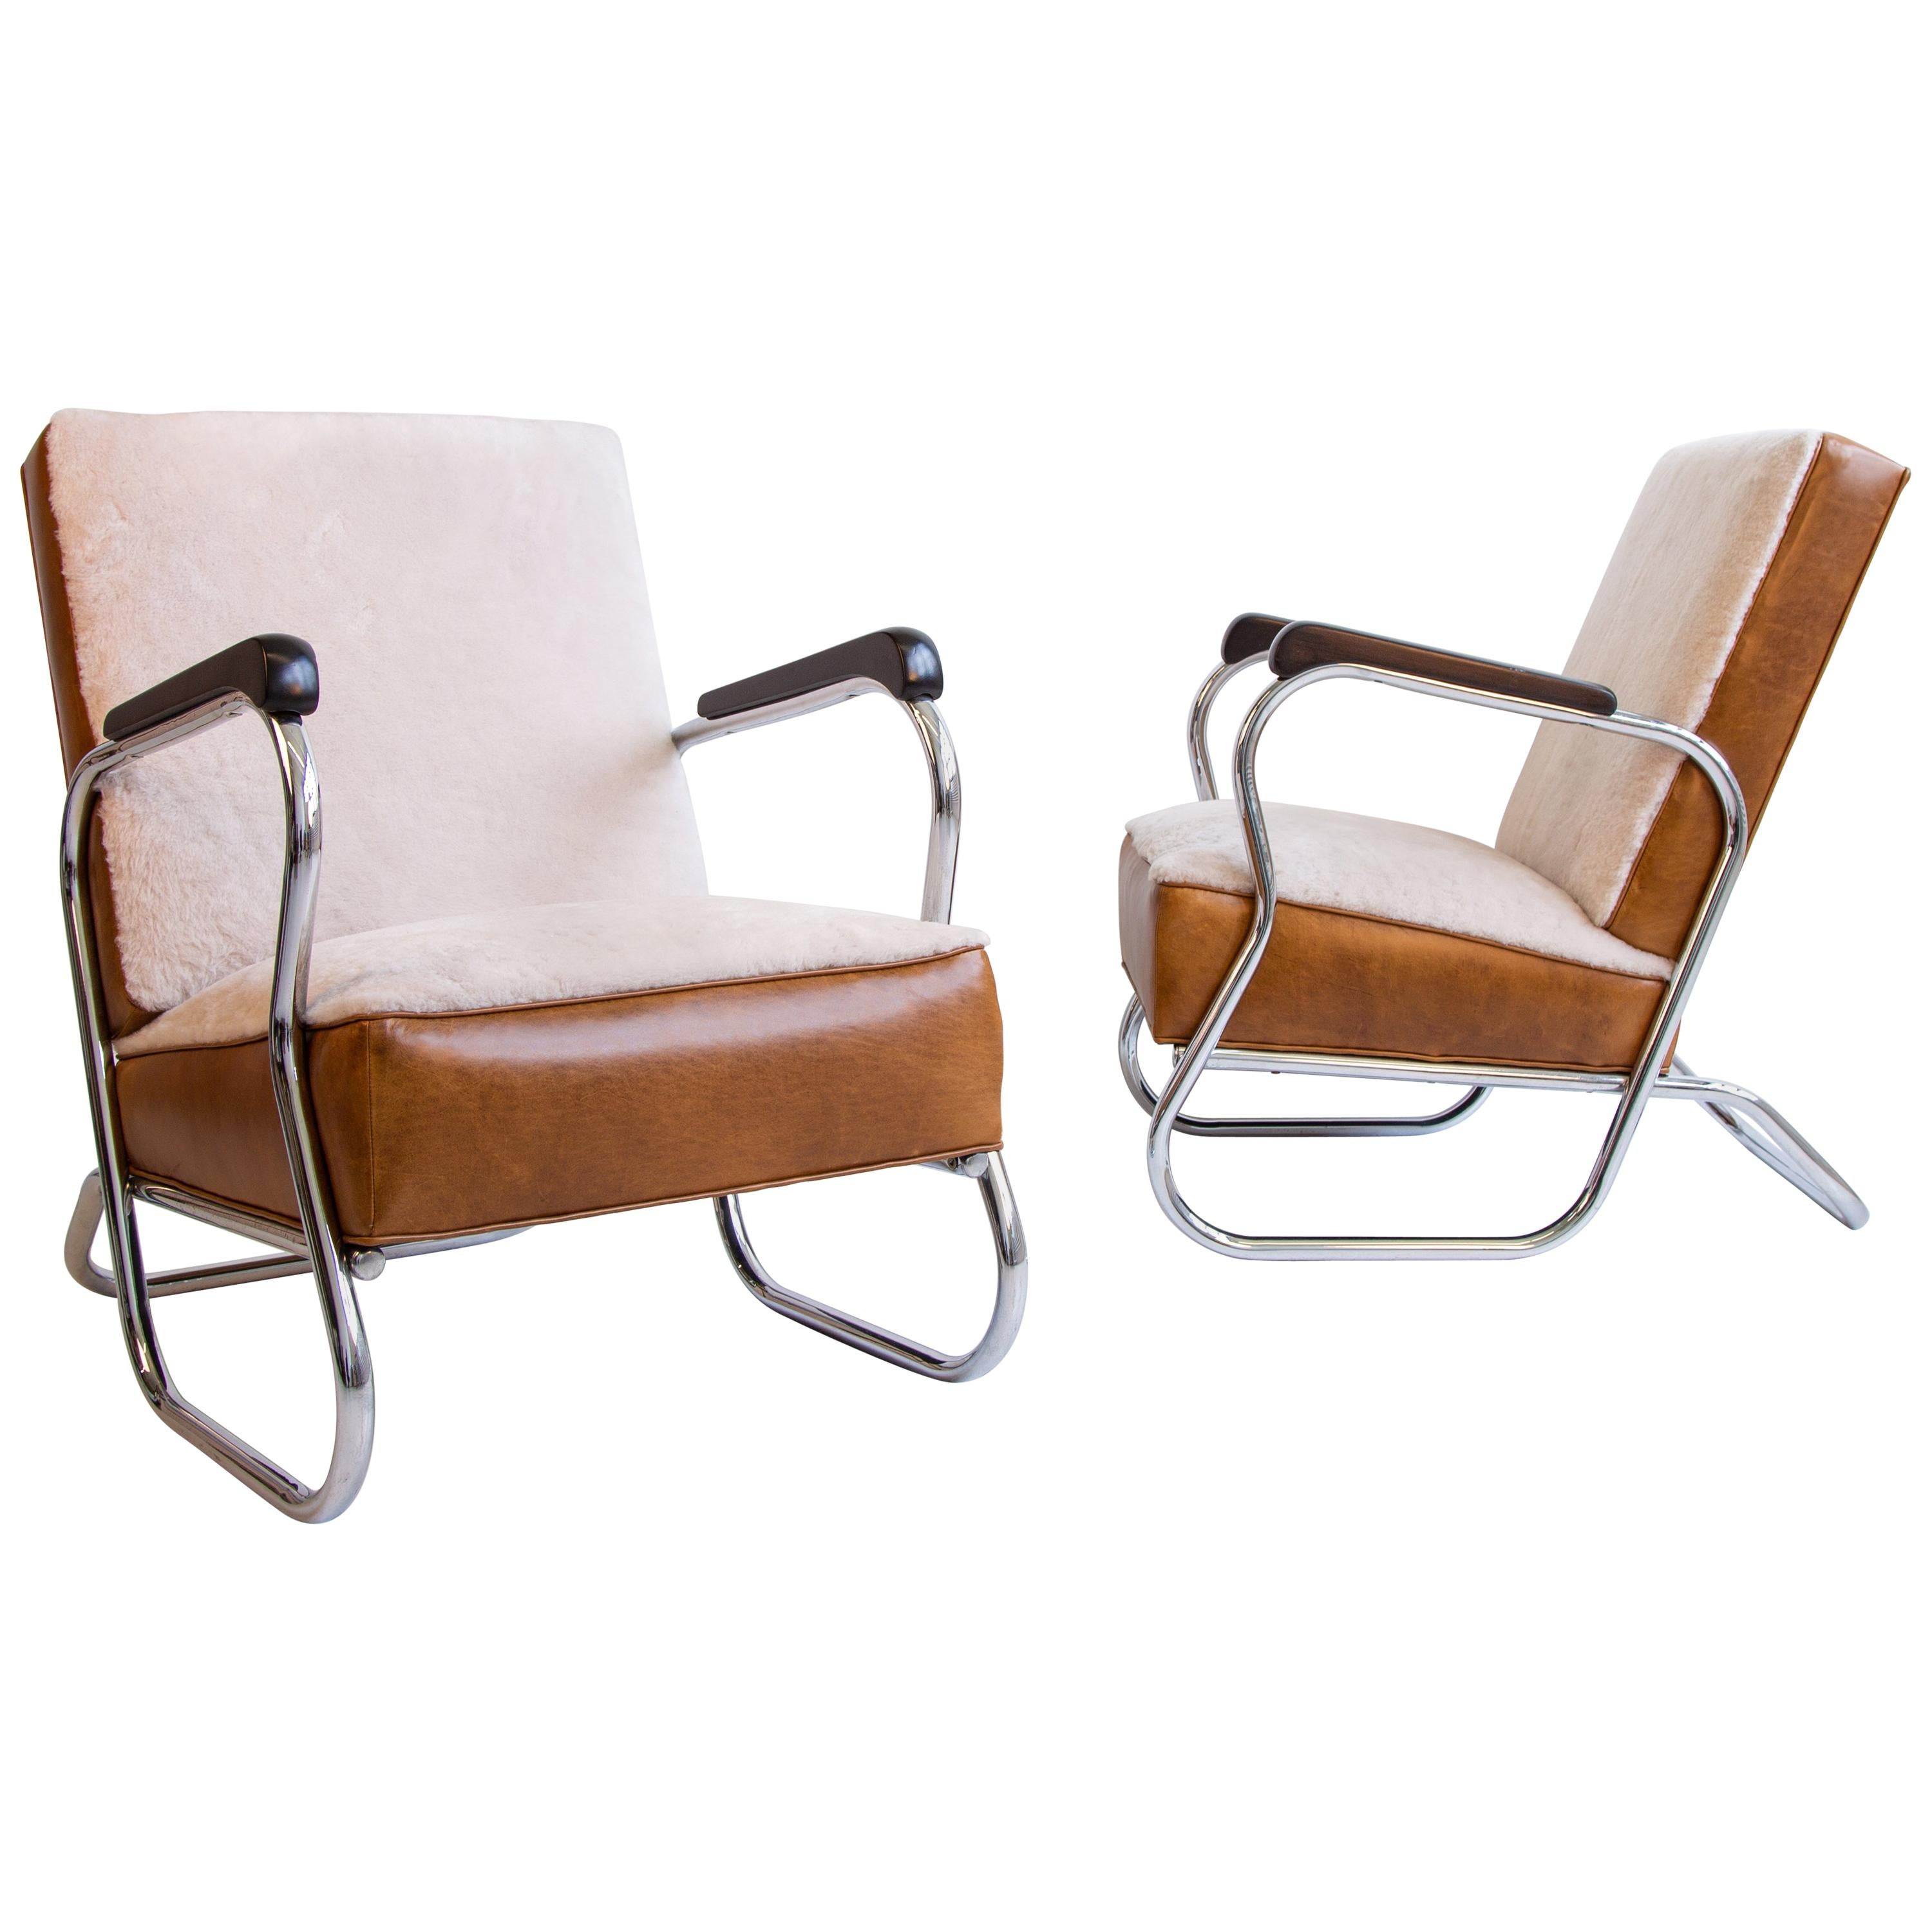 Vintage Pair of Tubular Chrome Lounge Chairs, Art Deco, American